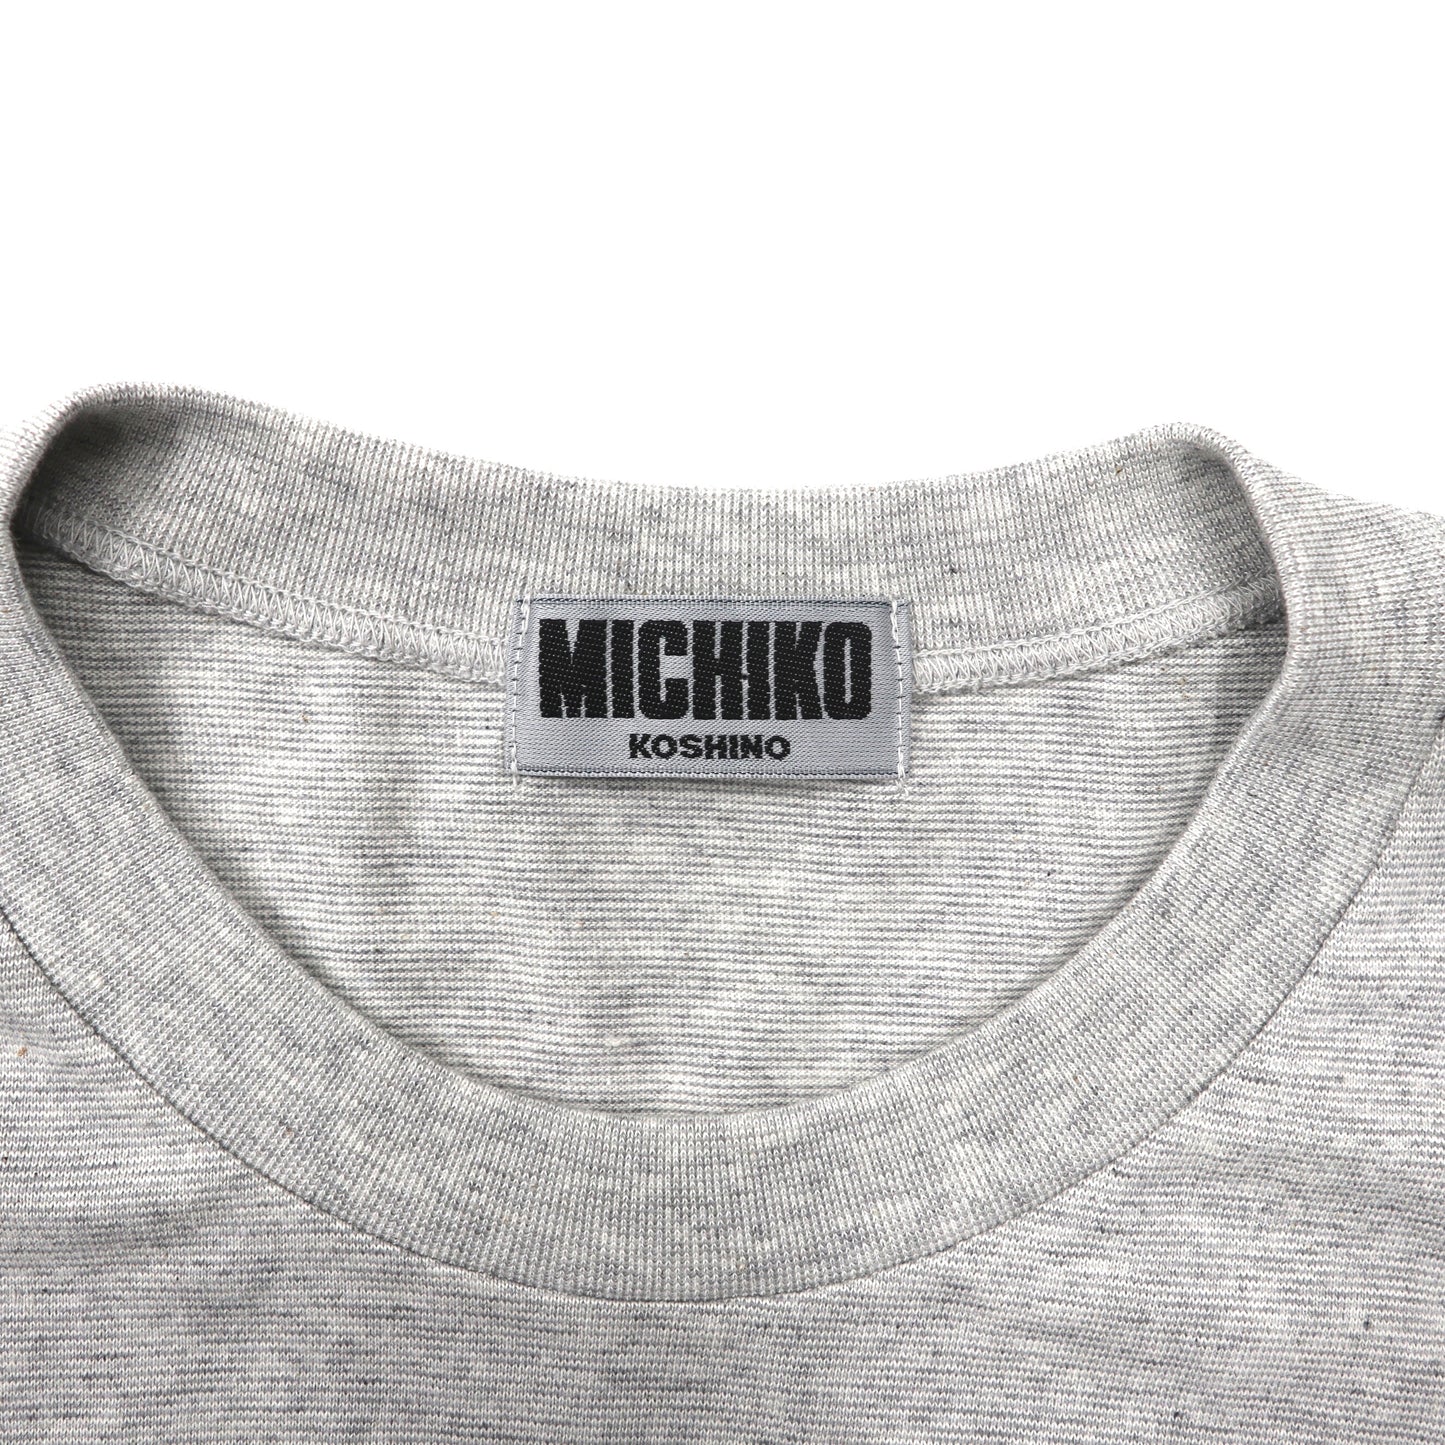 MICHIKO LONDON Tシャツ XL グレー コットン ロゴプリント 90年代